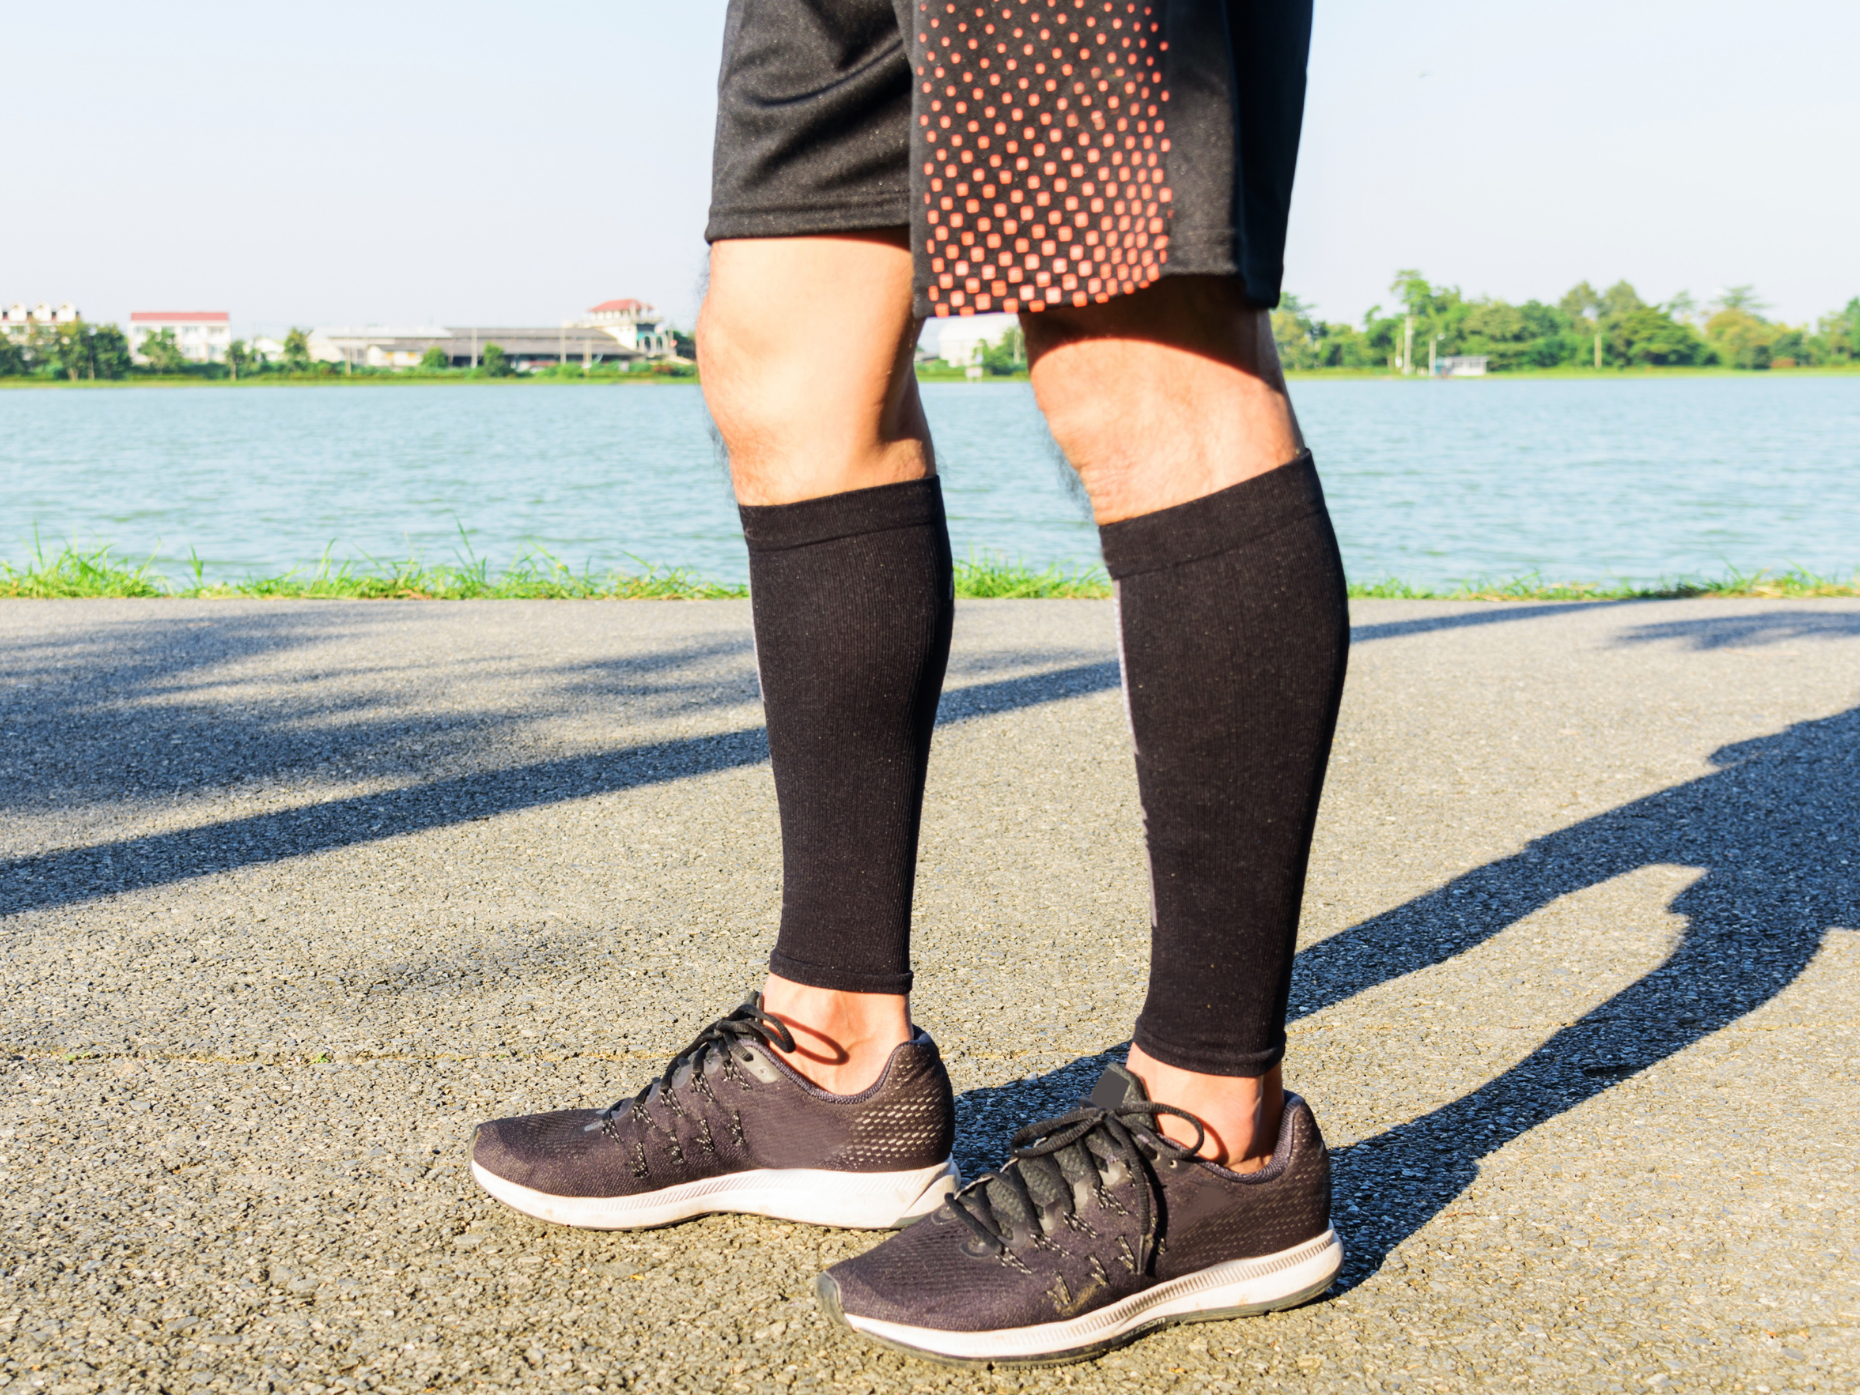 Why Wear Leg Compression Sleeves?